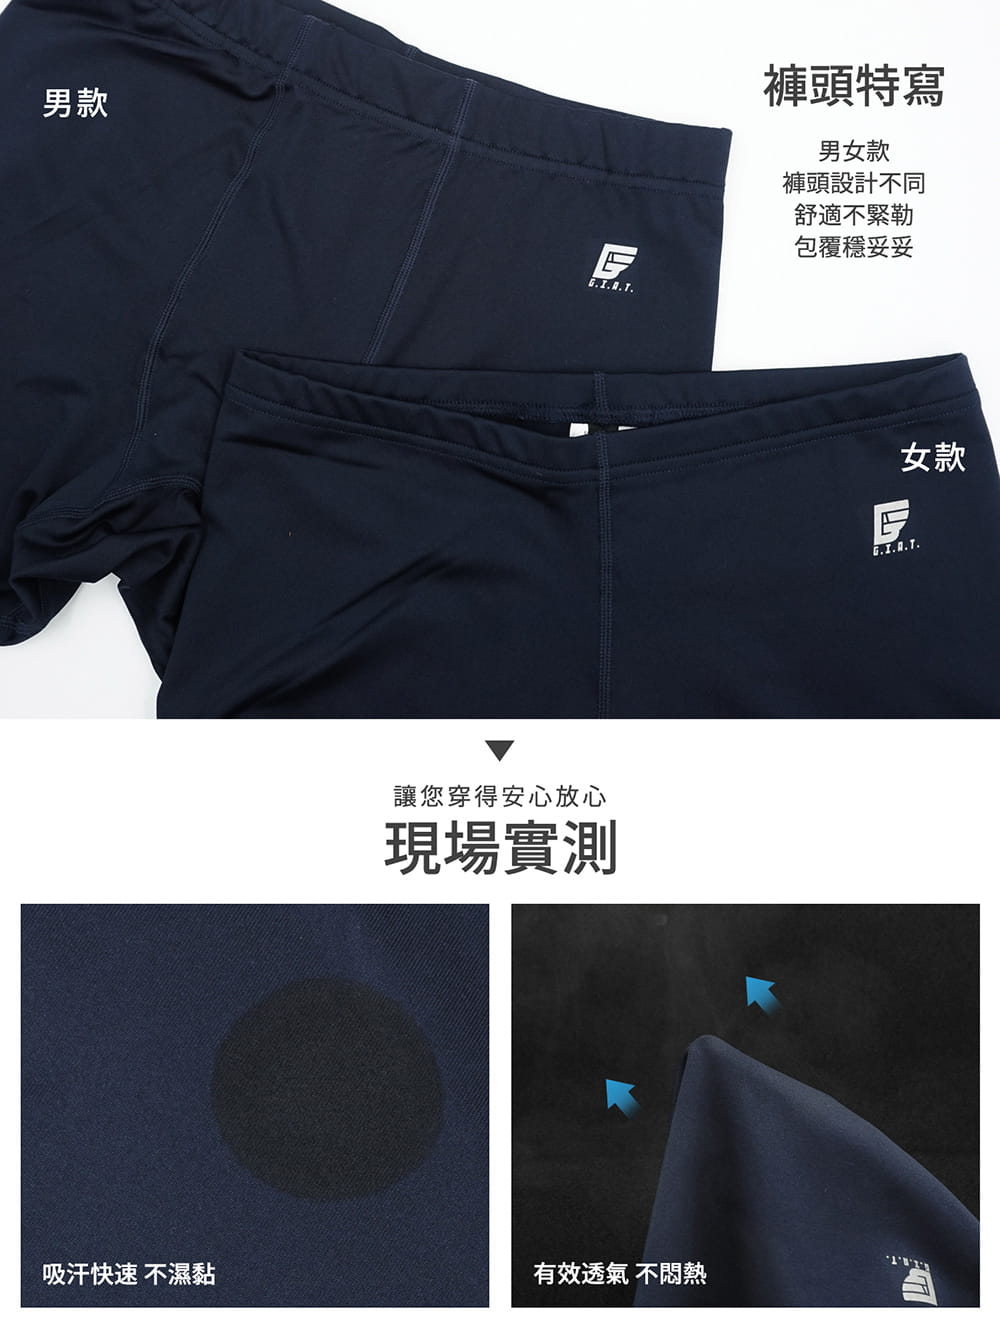 【GIAT】台灣製UPF50+防曬機能運動排汗褲(男女款) 7